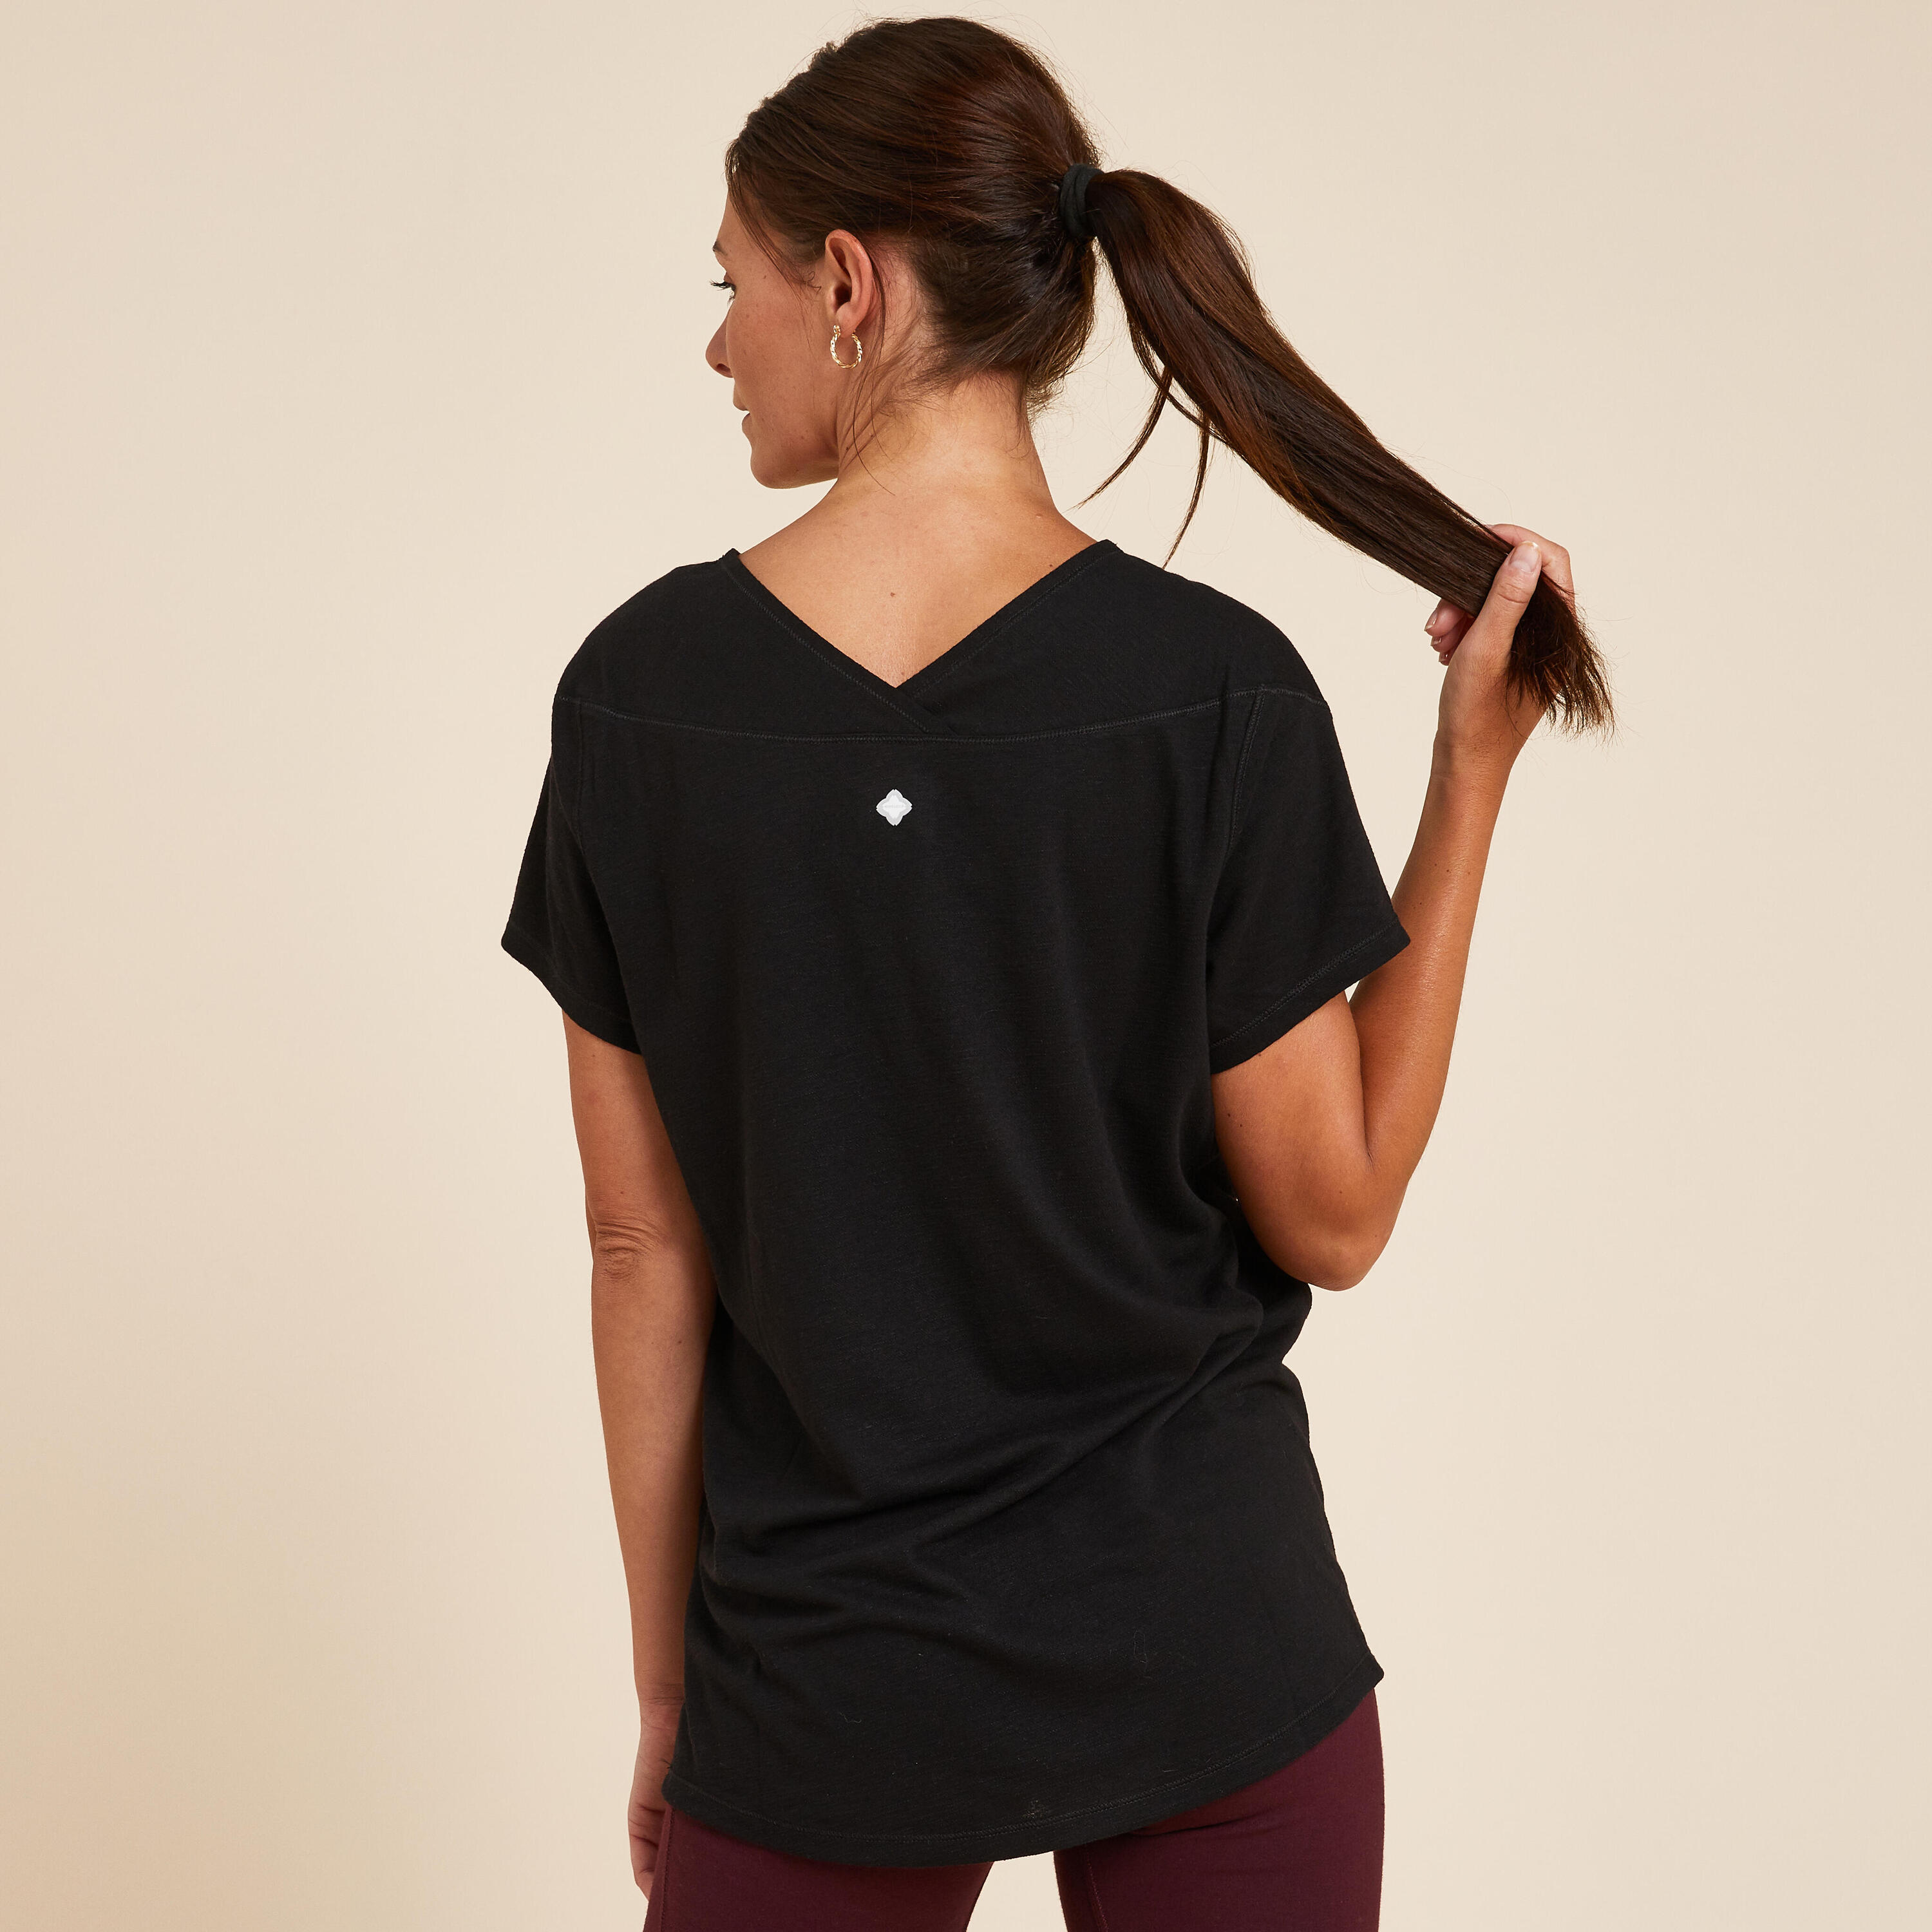 Women's Gentle Yoga T-Shirt - Black 1/6